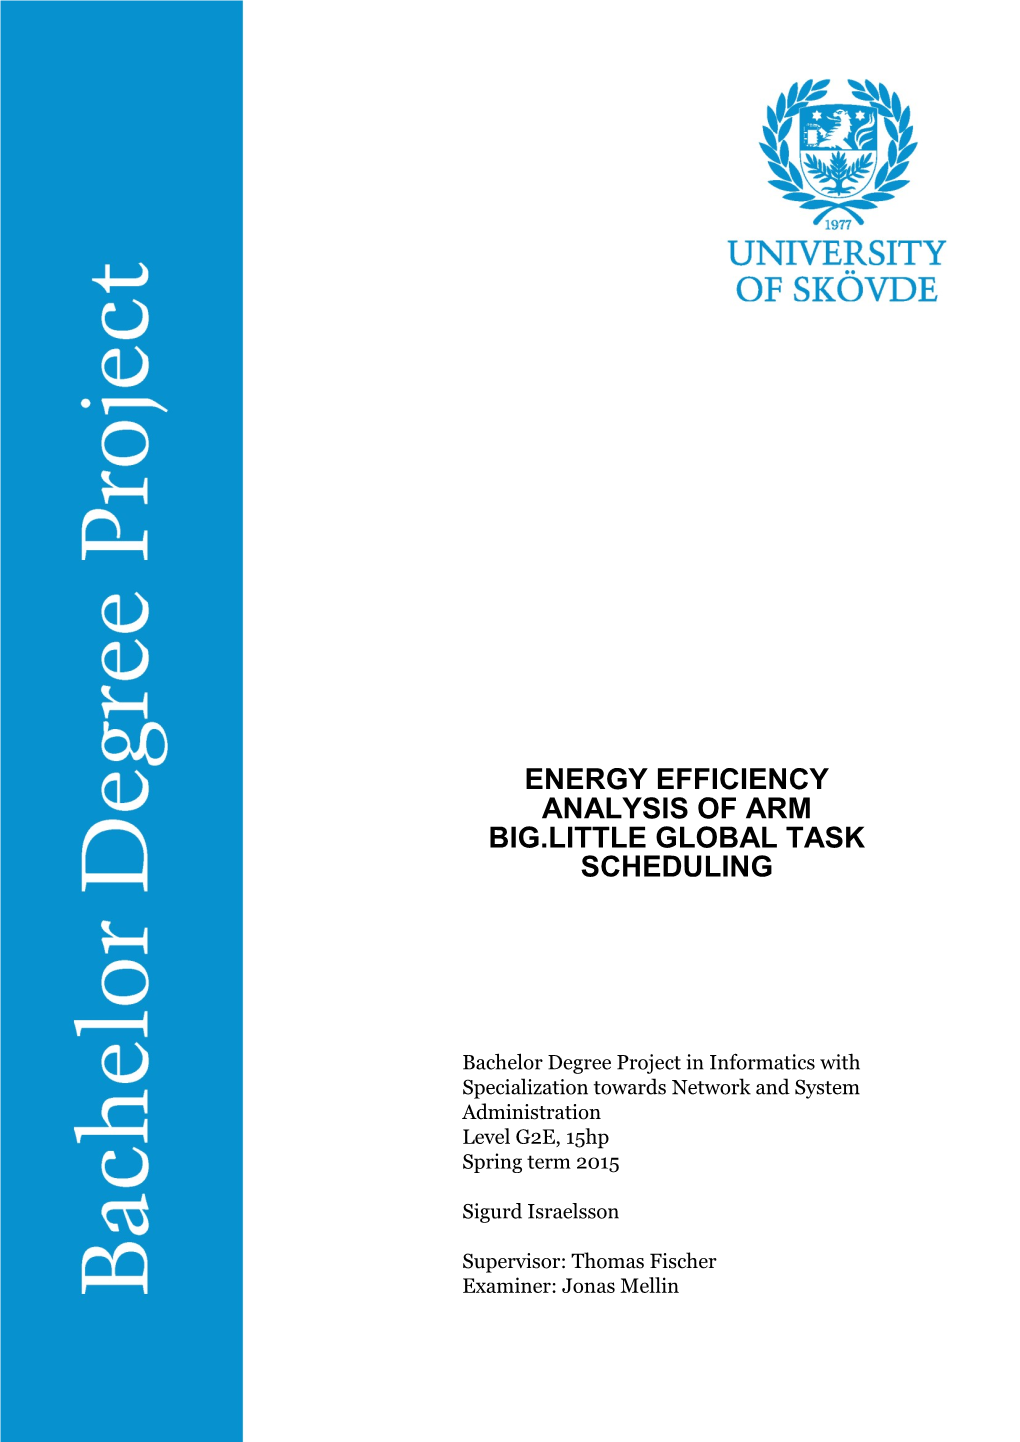 Energy Efficiency Analysis of Arm Big.Little Global Task Scheduling